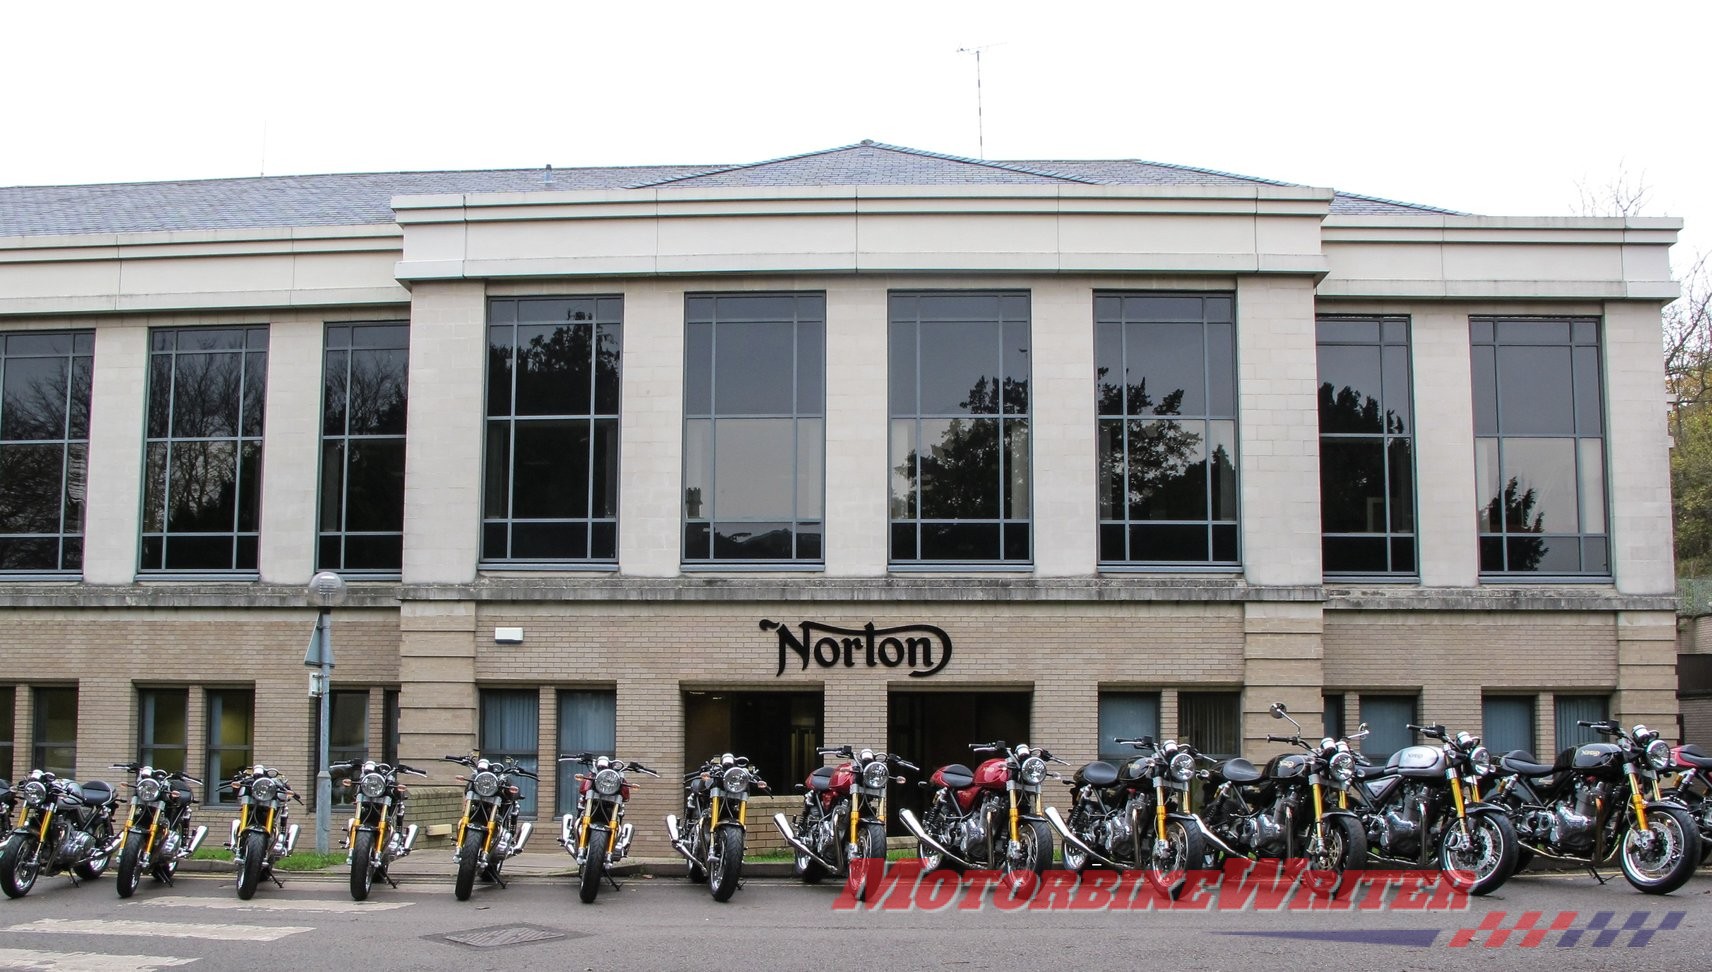 Norton Motorcycles Donington Hall factory crowd